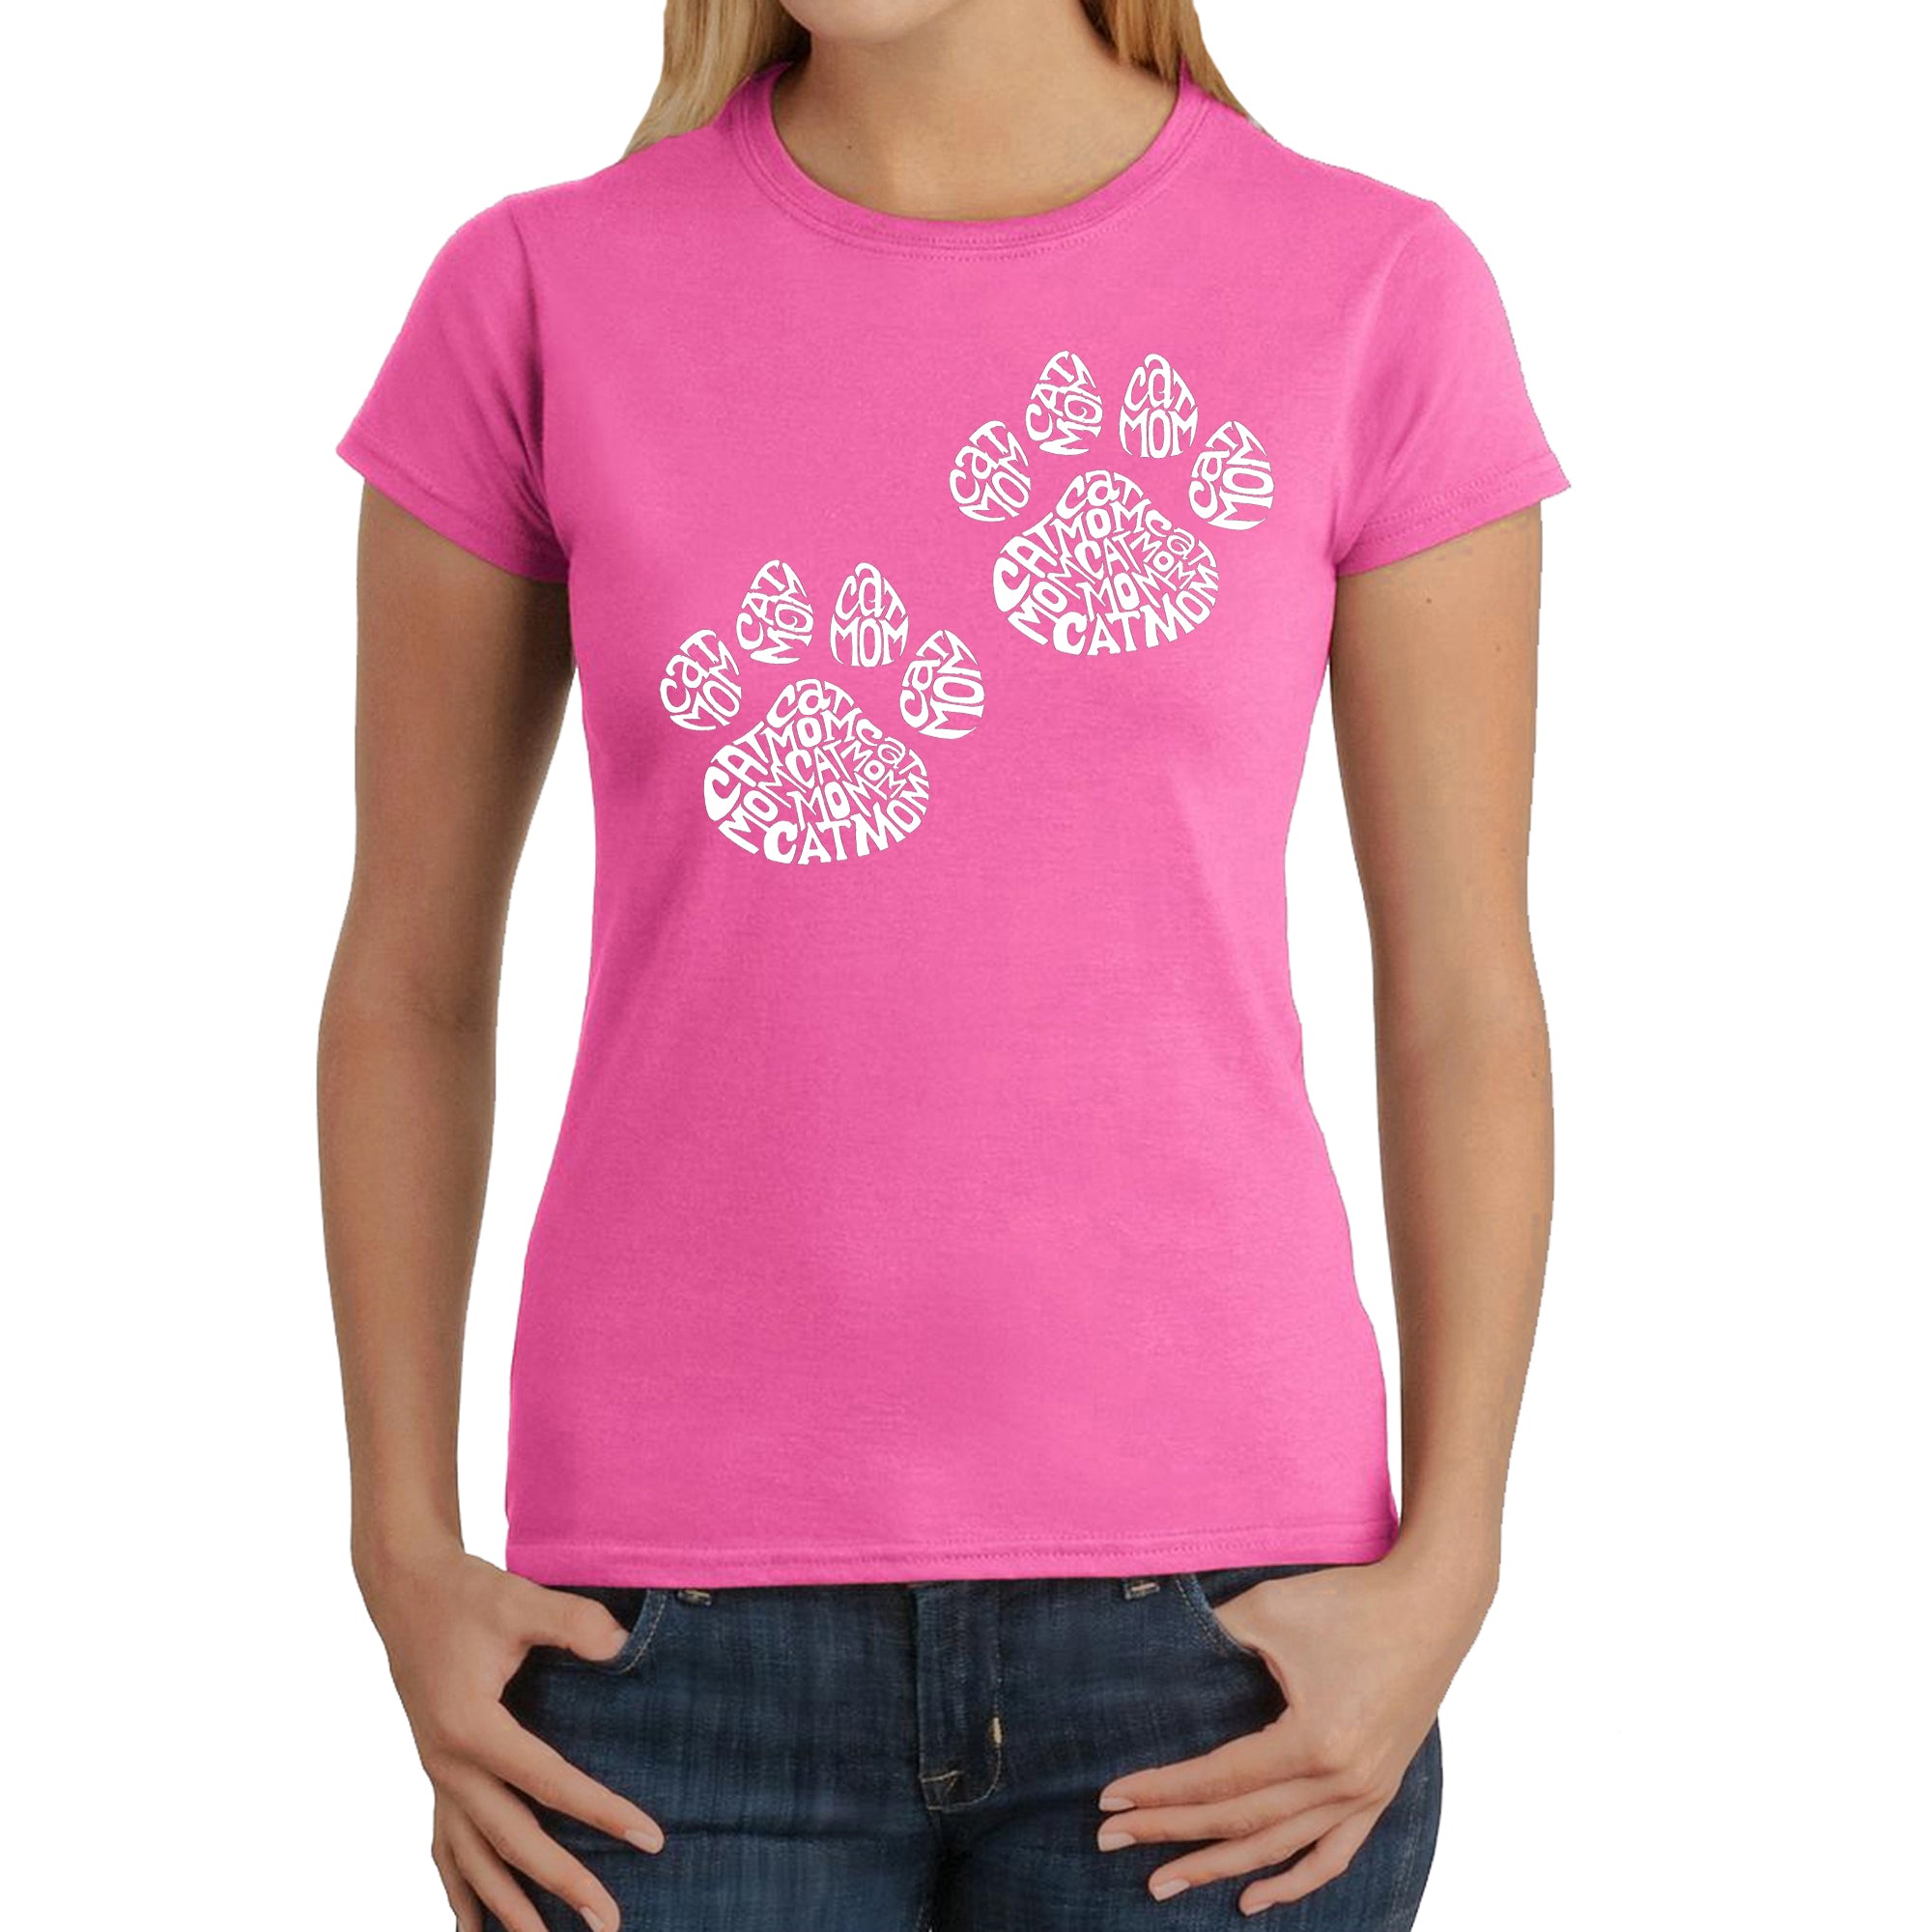 Cat Mom - Women's Word Art T-Shirt - Pink - X-Large